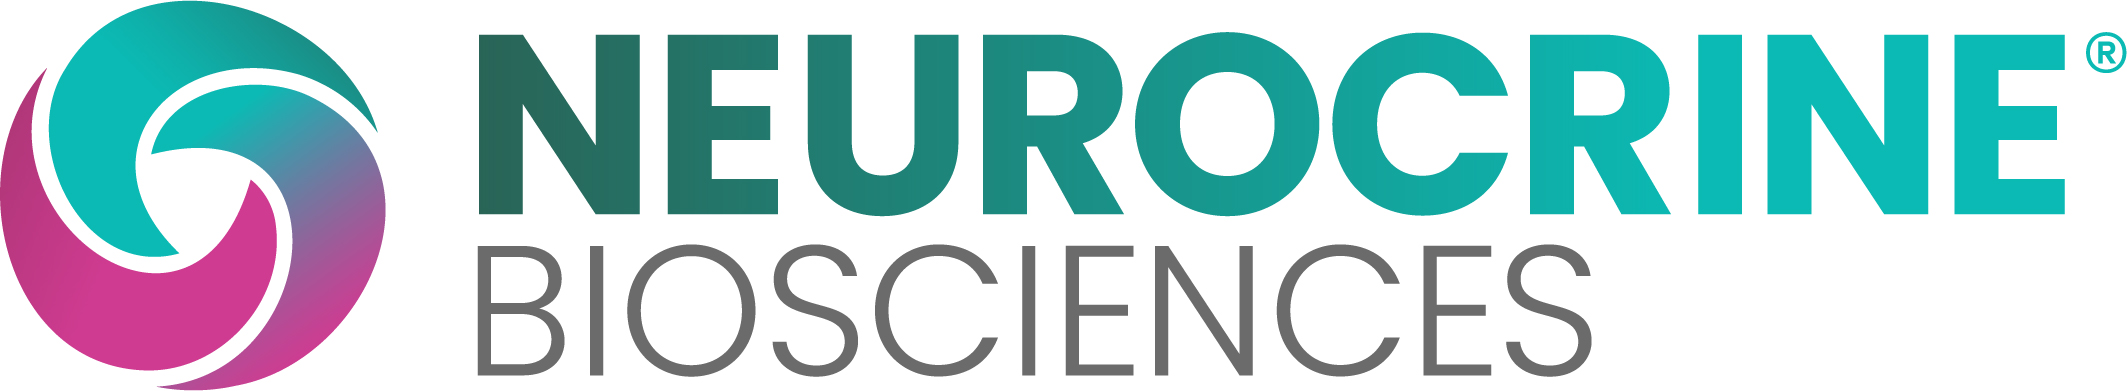 NEW neurocrine logo 2021 notag rgb